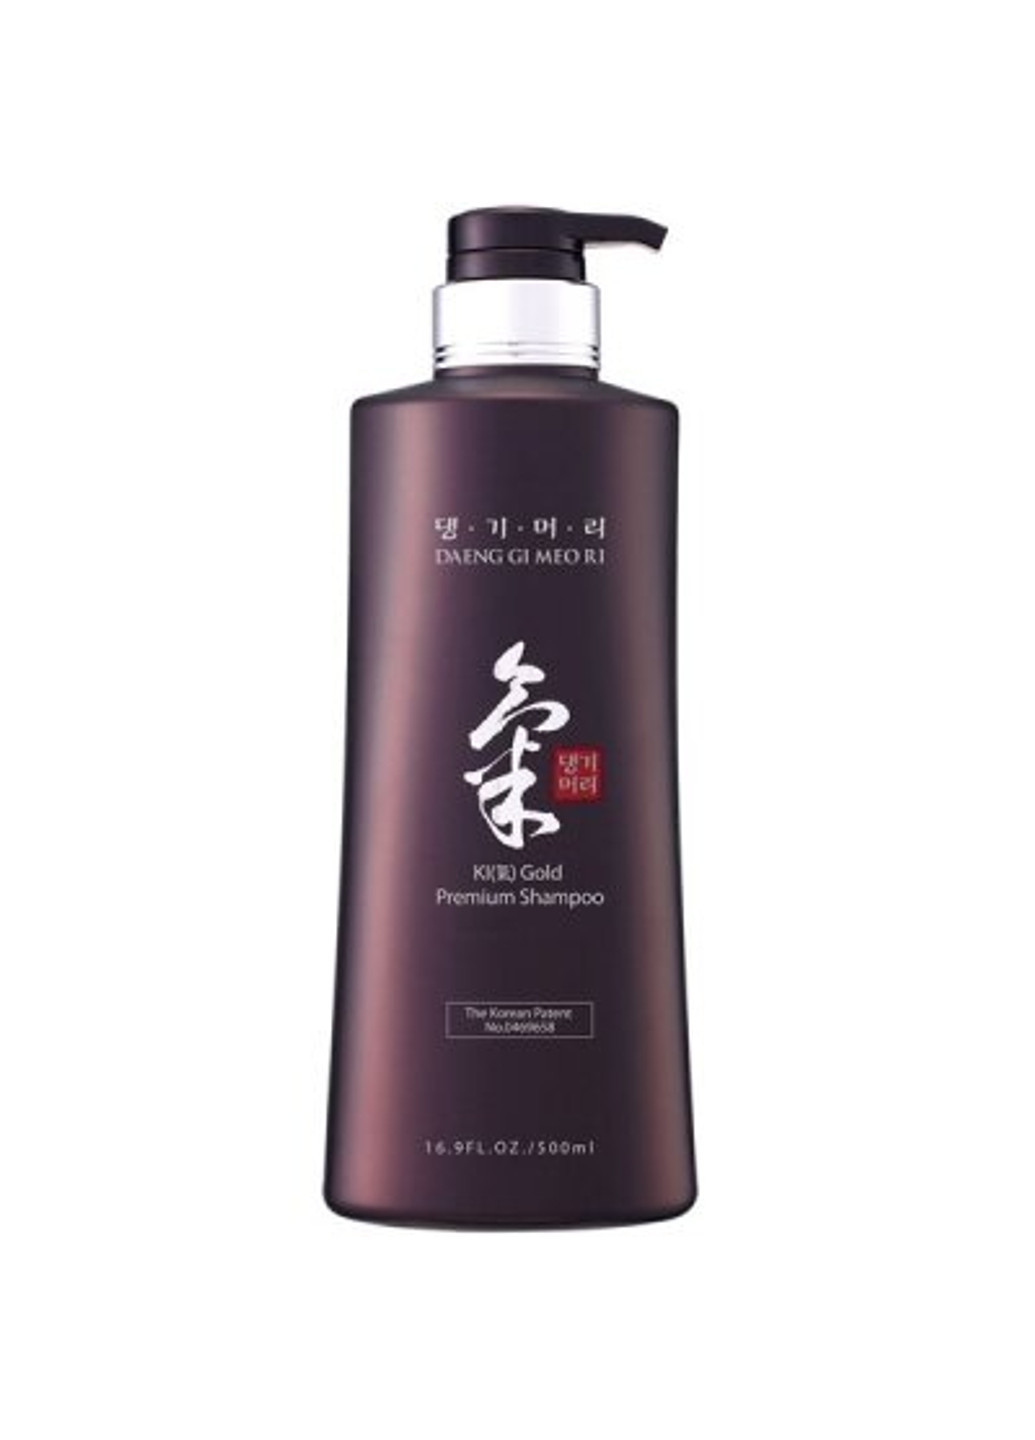 Универсальный шампунь KI GOLD Premium Shampoo 500 мл Daeng Gi Meo Ri (251856183)